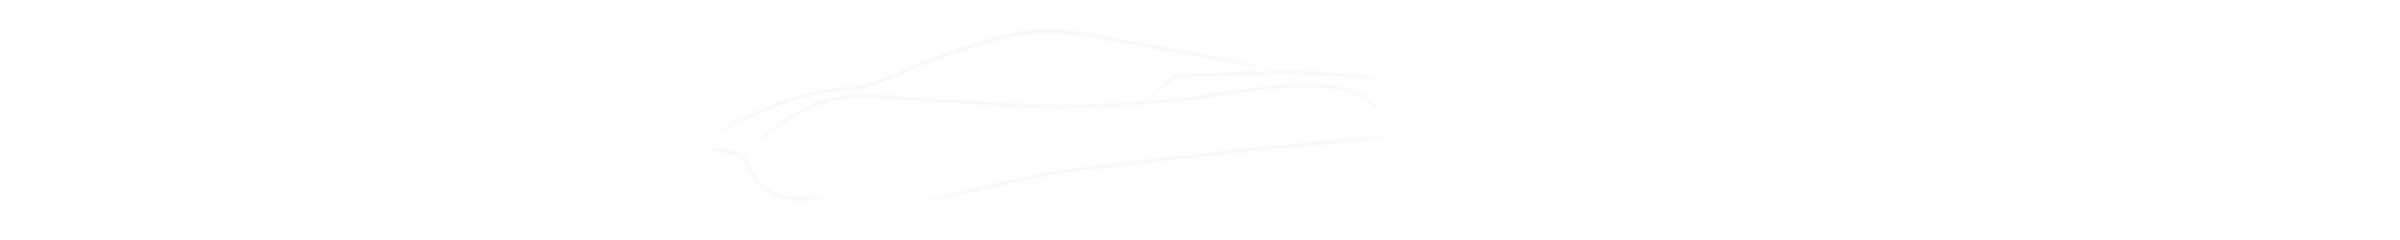 niemans-detailing-horizontal-logo-white-transparent-background